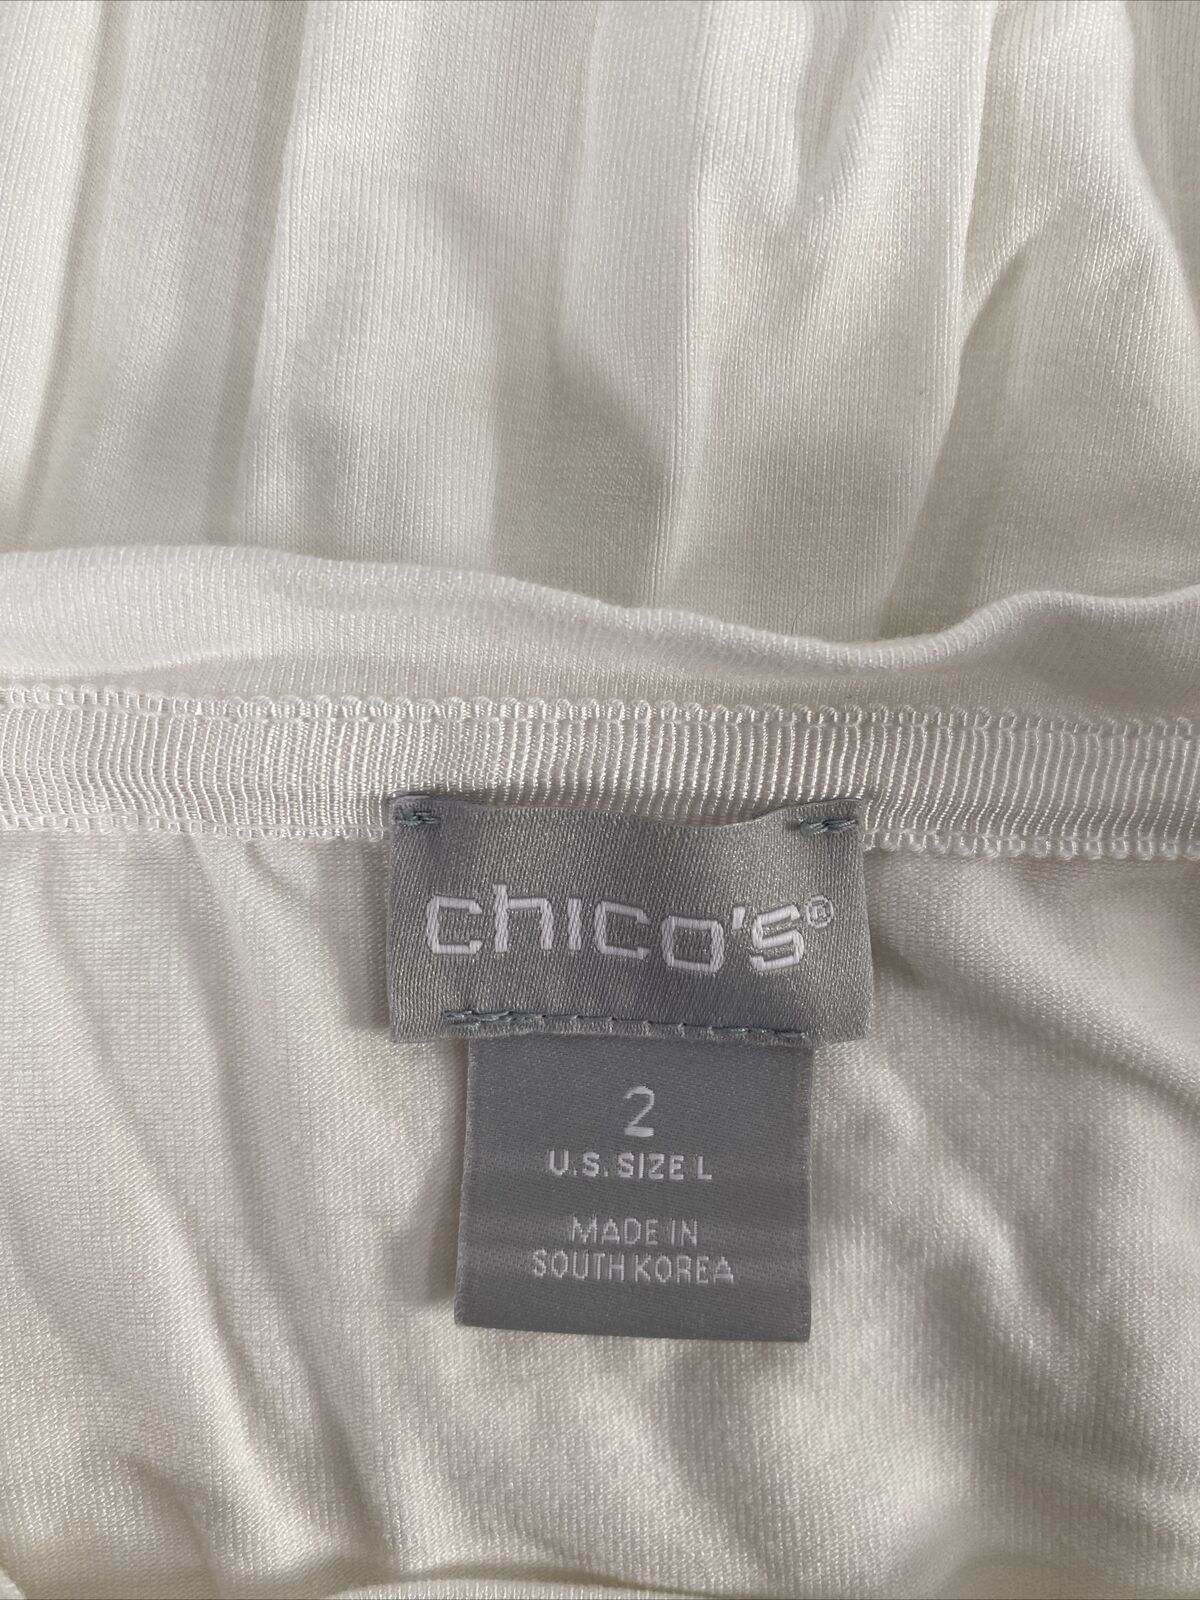 Chico's Camiseta de manga corta blanca Flutter para mujer - L